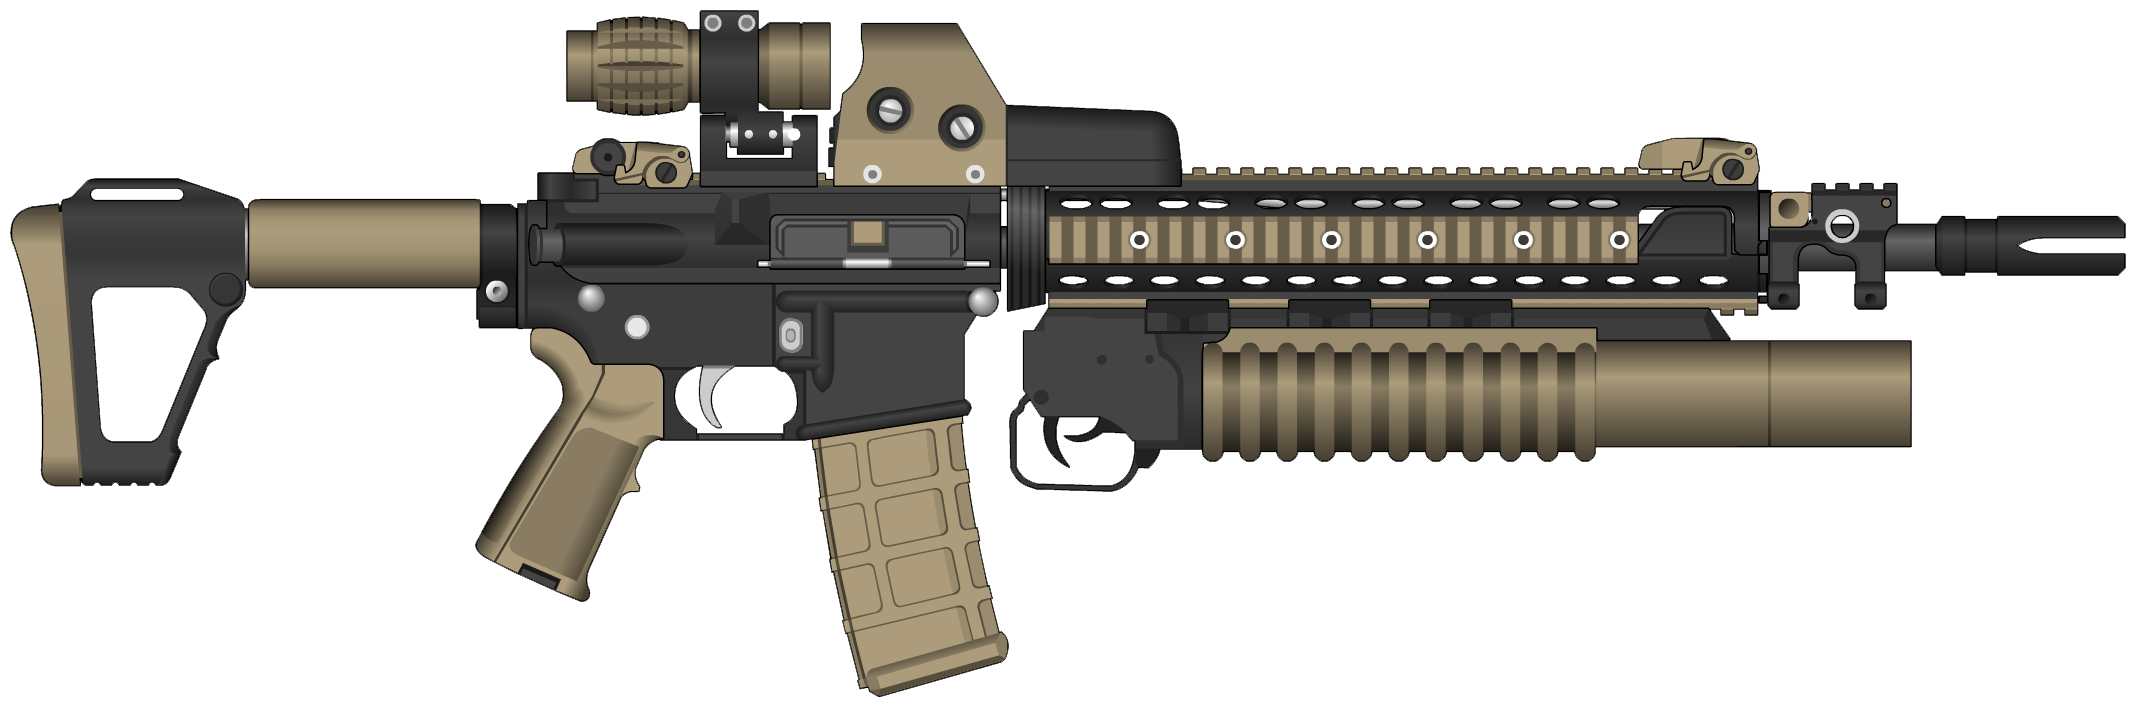 Rifle PNG HD - 126657